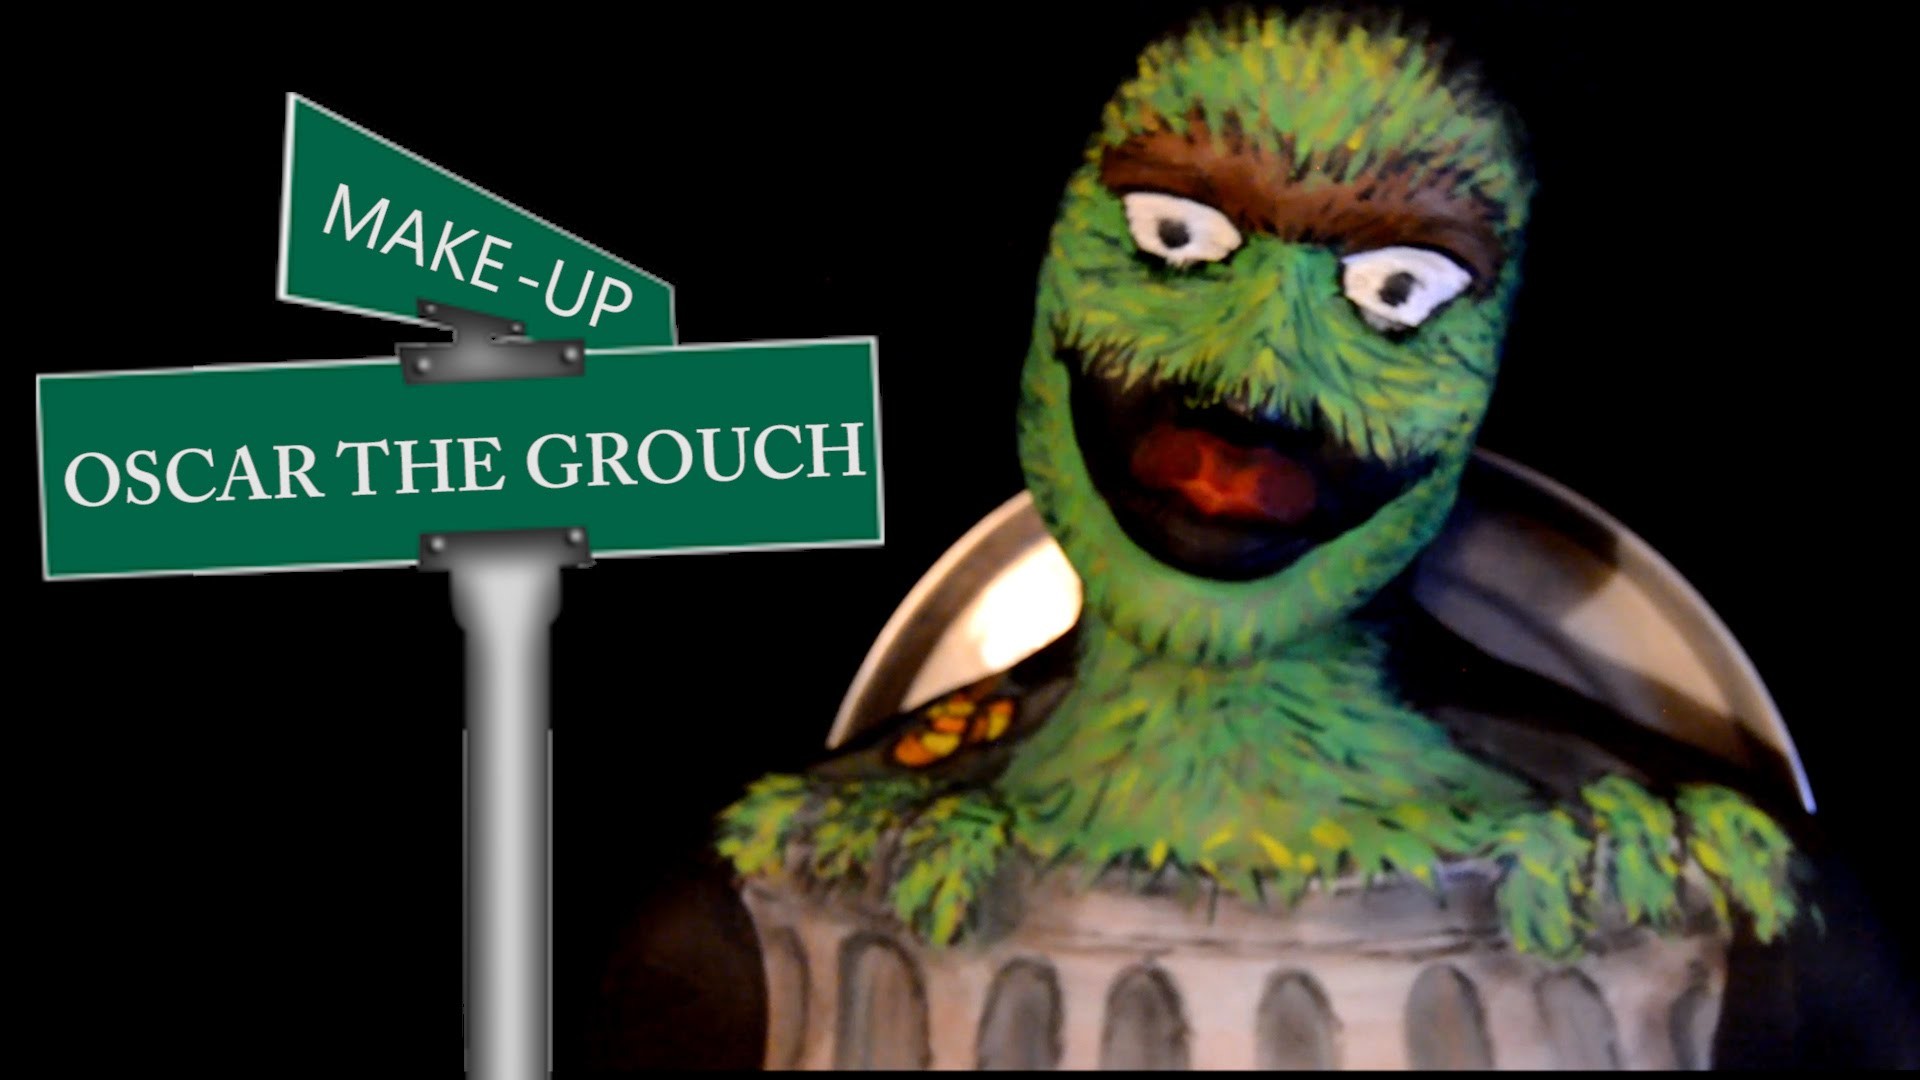 1920x1080 Oscar the Grouch Makeup from Sesame Street